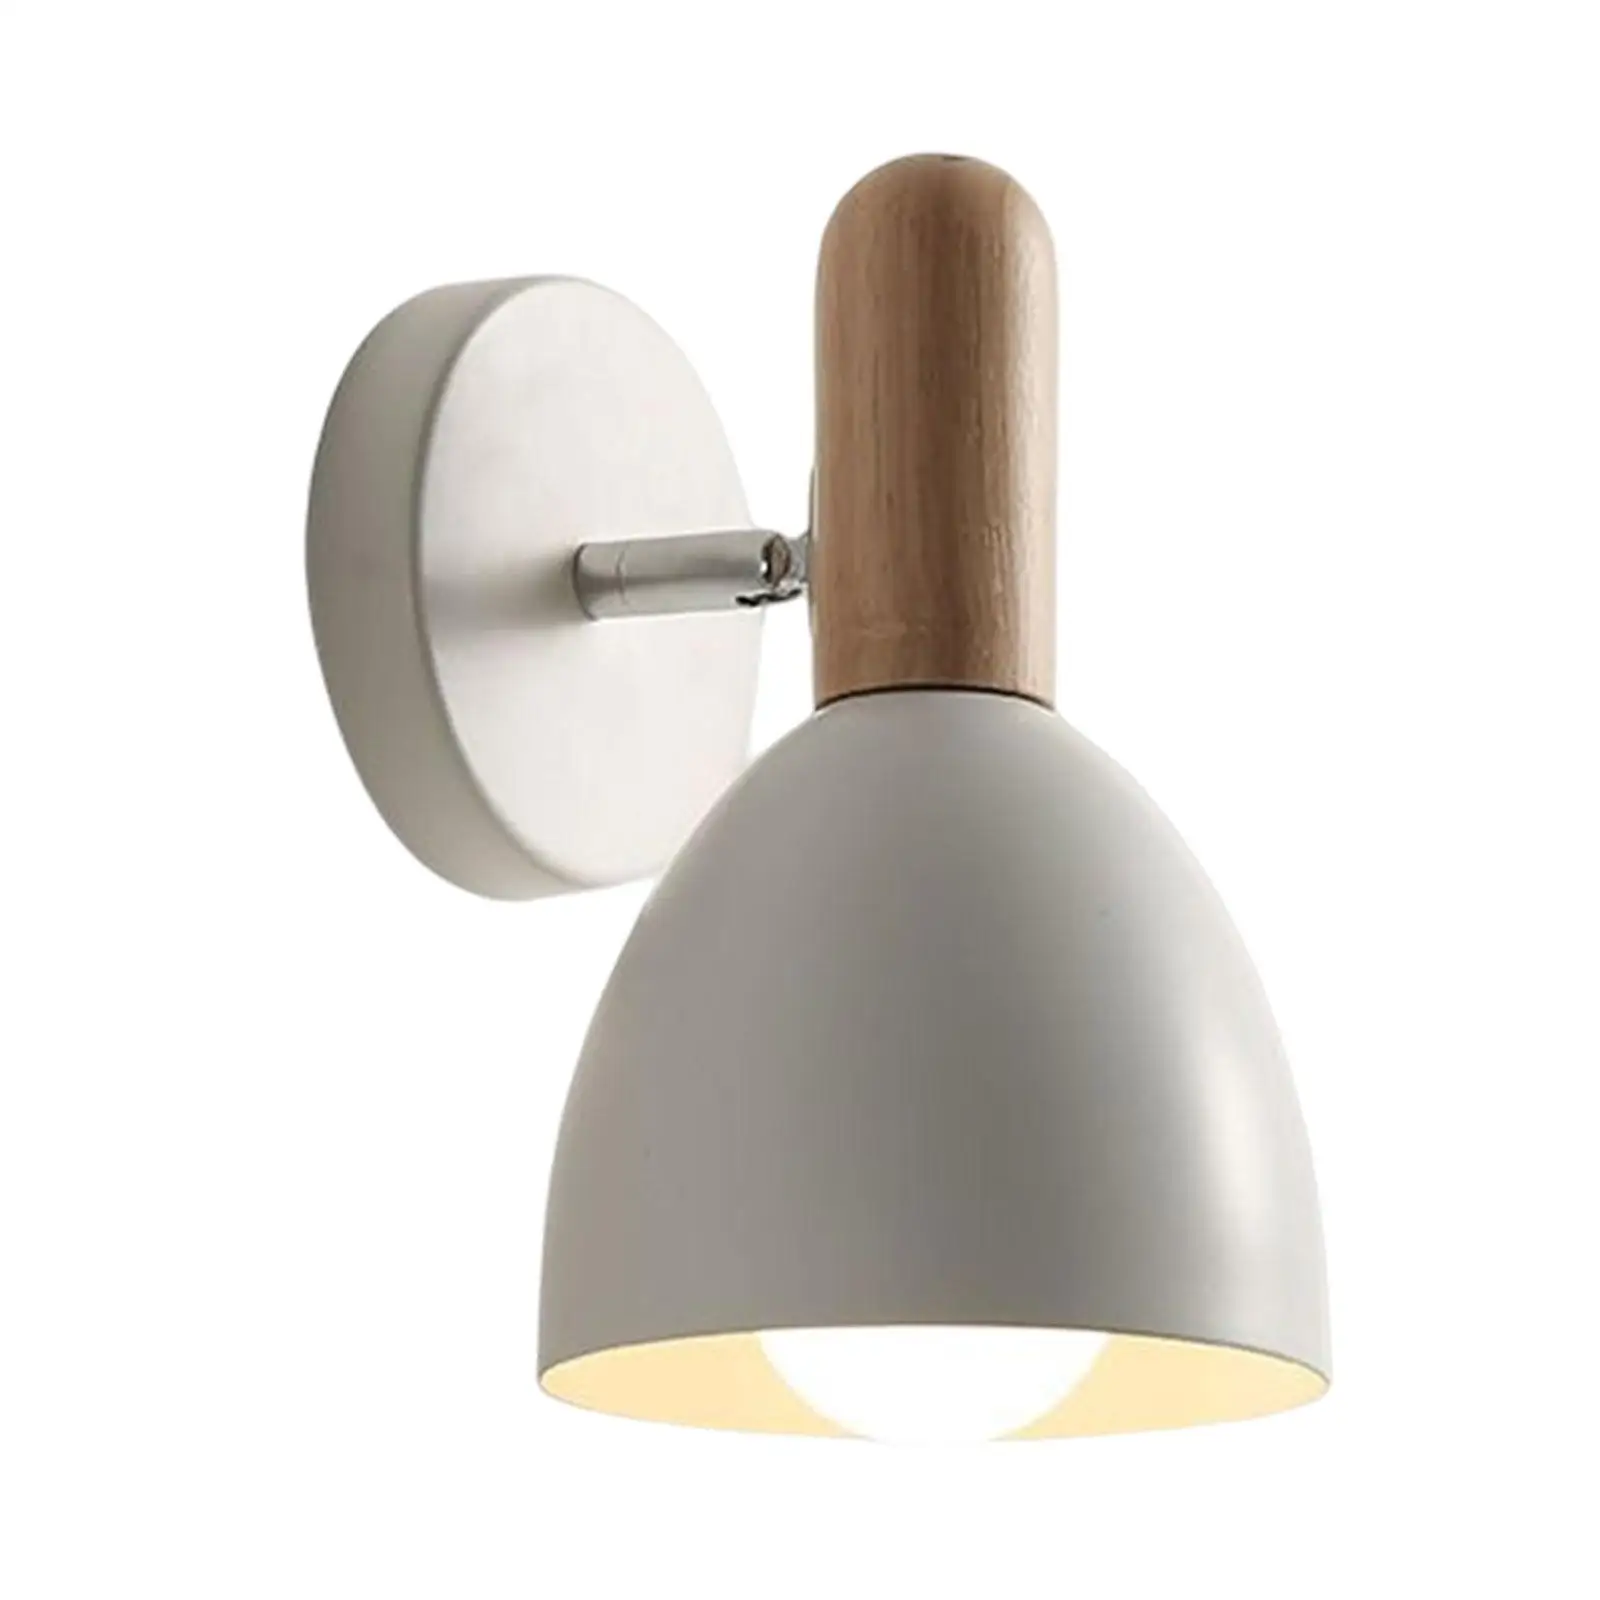 Fixture E27 Sconce Lighting Decorative Minimalist for Home Indoor Bedside Hallway Dining Room